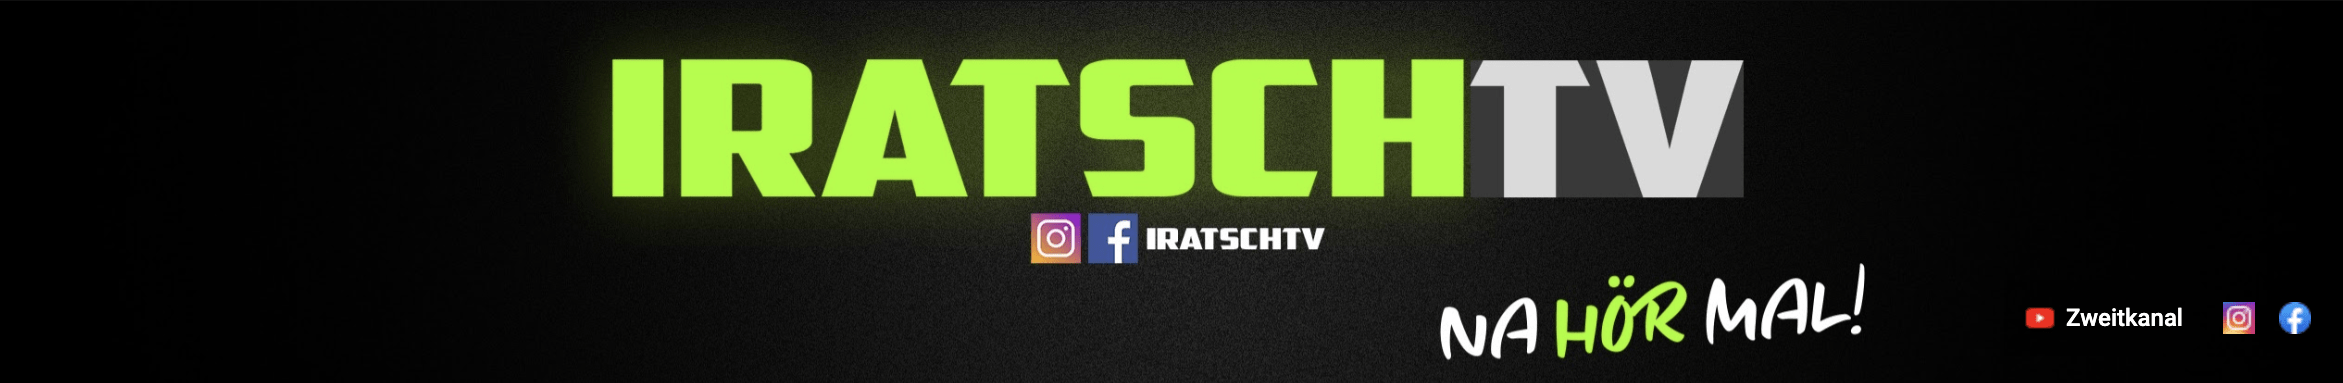 IratschTV Youtube Cover